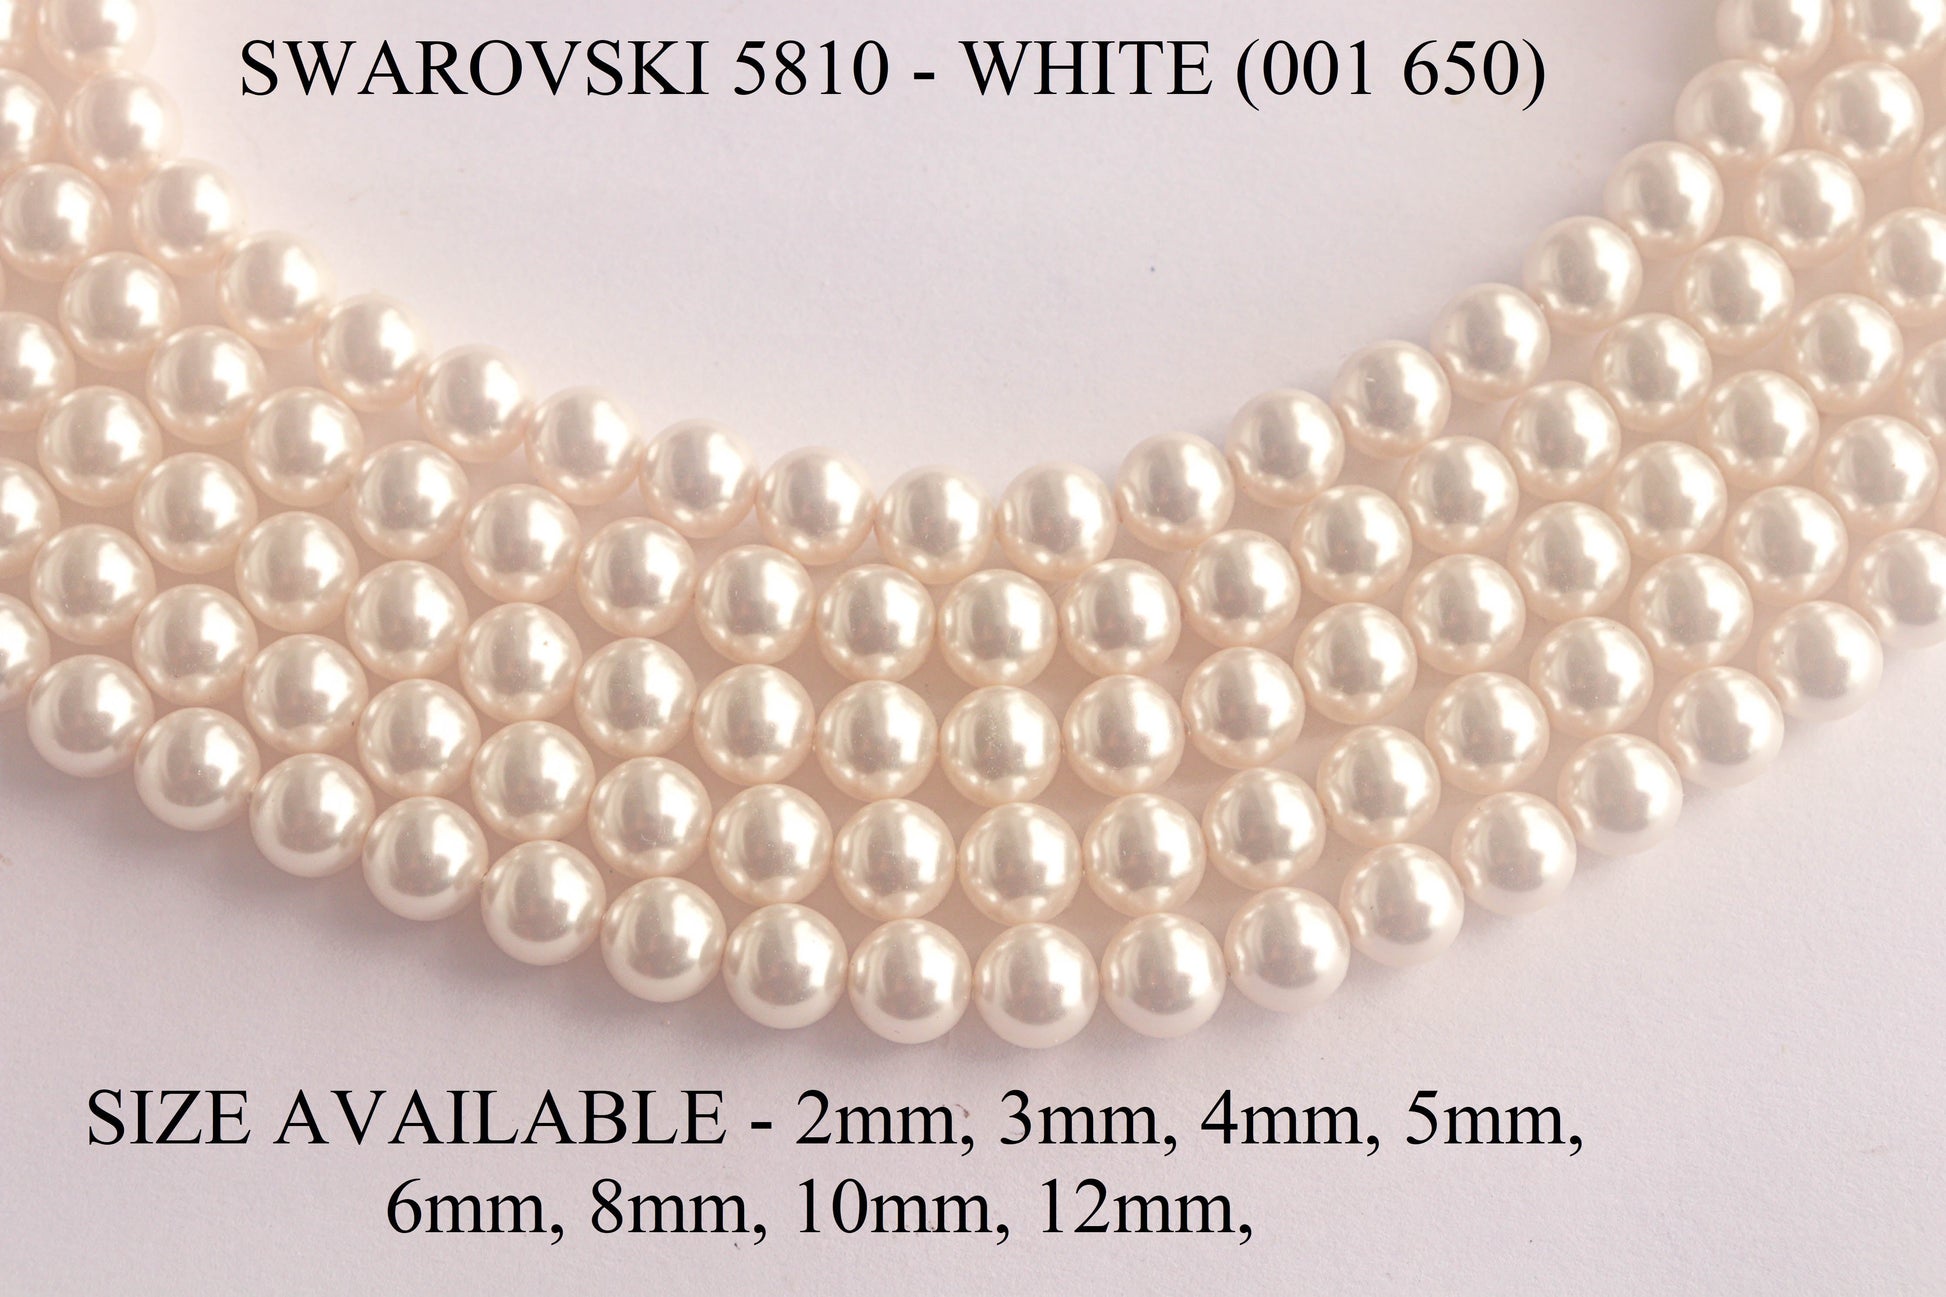 2mm Crystal White (001 650) Genuine Swarovski 5810 Pearls Round Beads jewelry making Beadsforyourjewelry